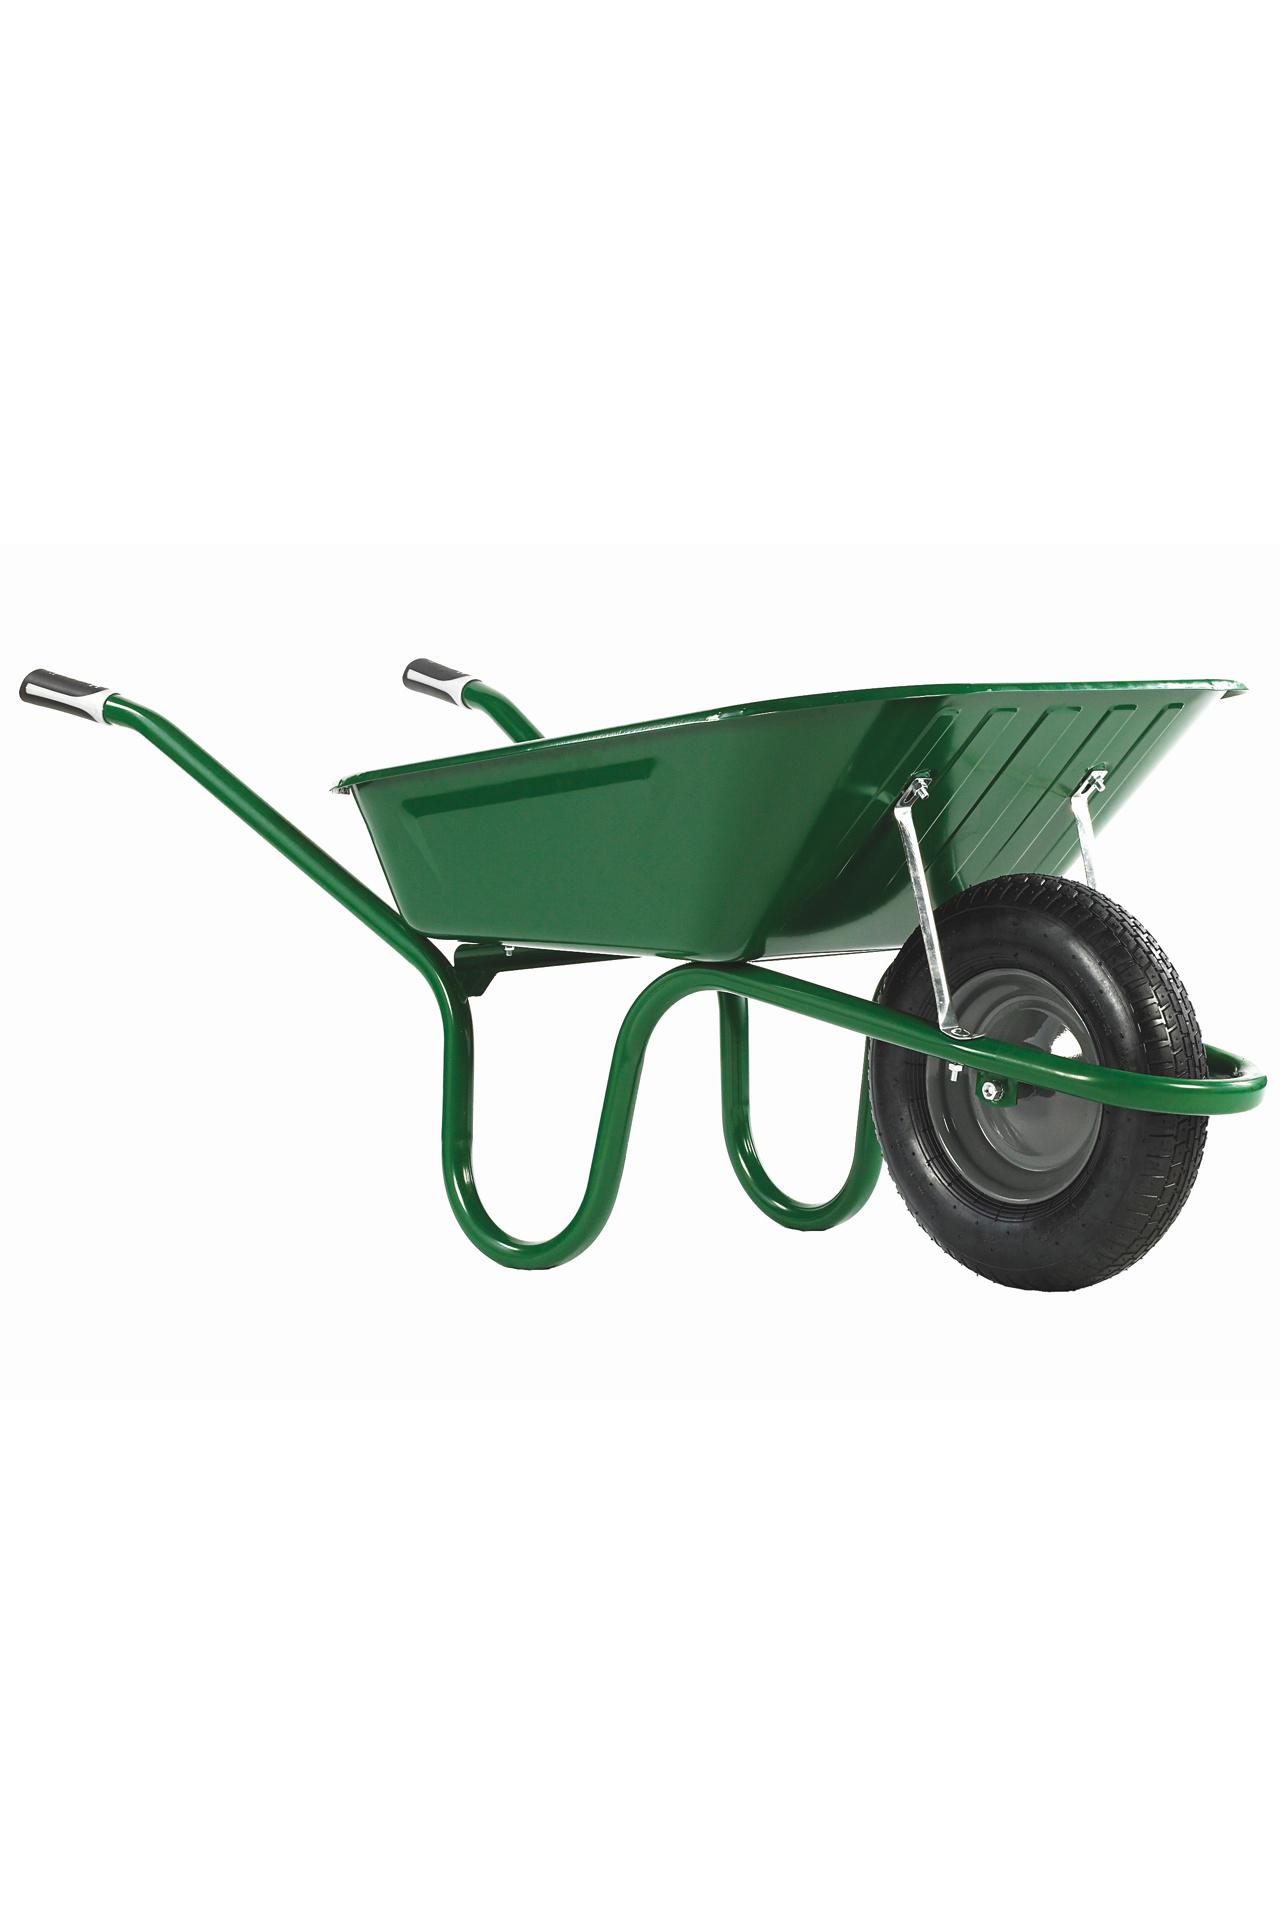 Haemmerlin Original Green Metal 90L Pneumatic Wheel Wheelbarrow #3